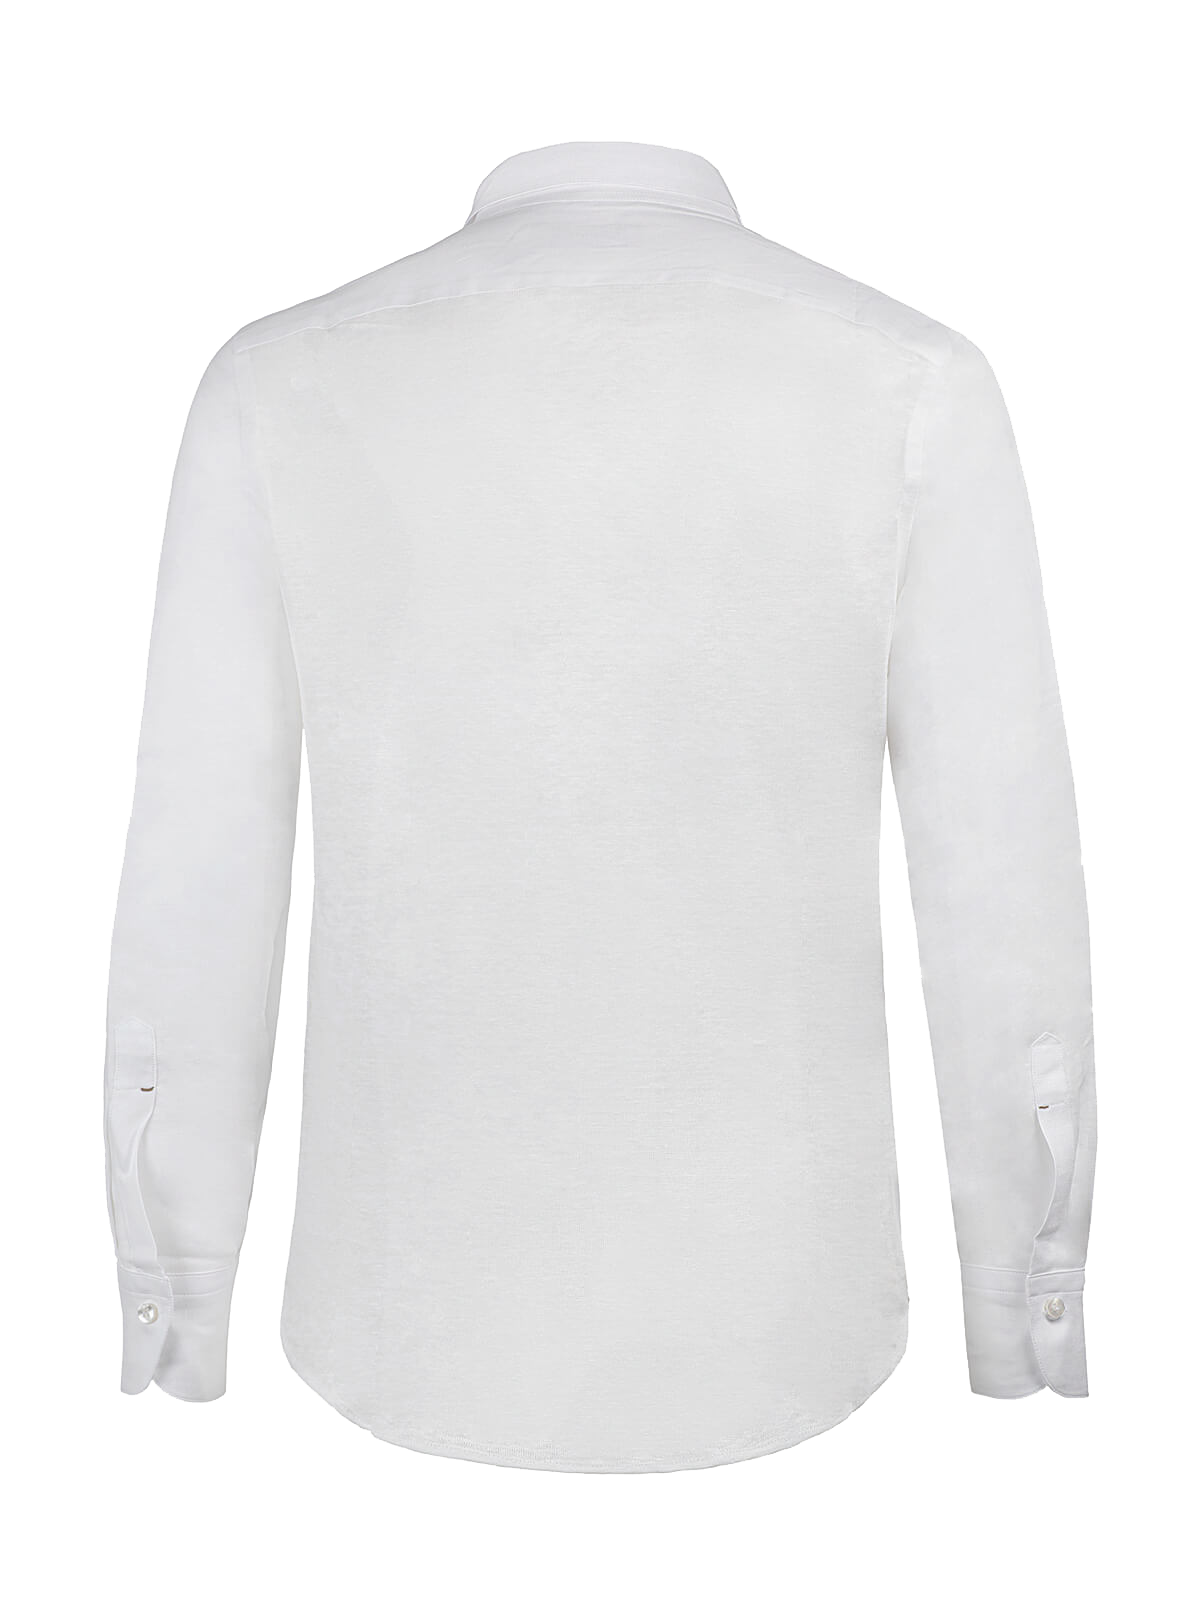 Camicia Mykonos 100% Capri white linen shirt back